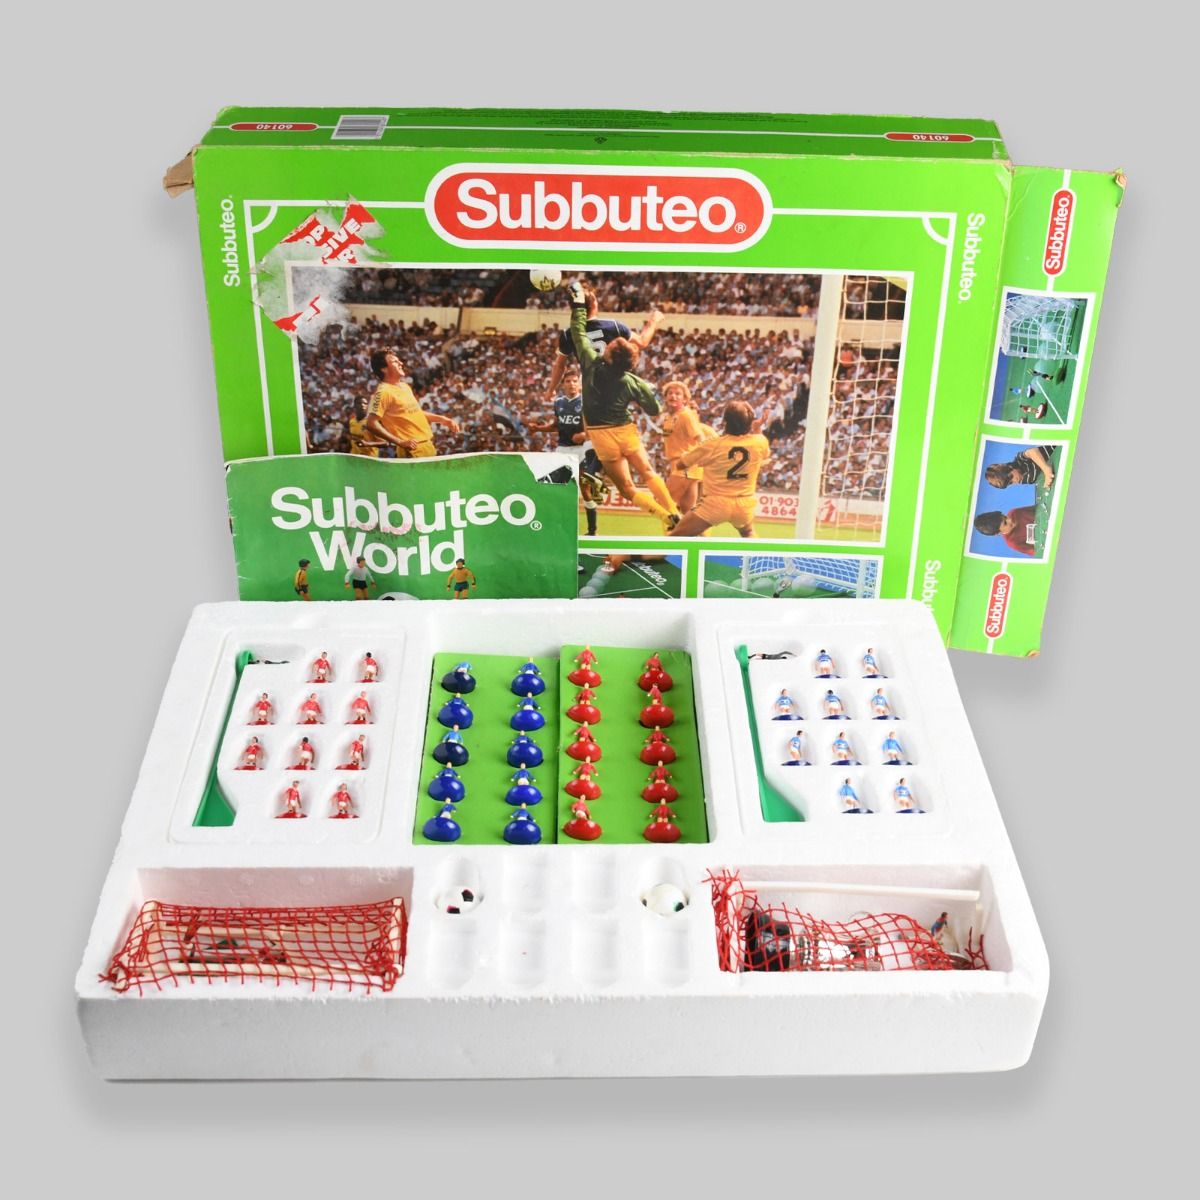 Subbuteo 1990s Table Top Football Game 60140